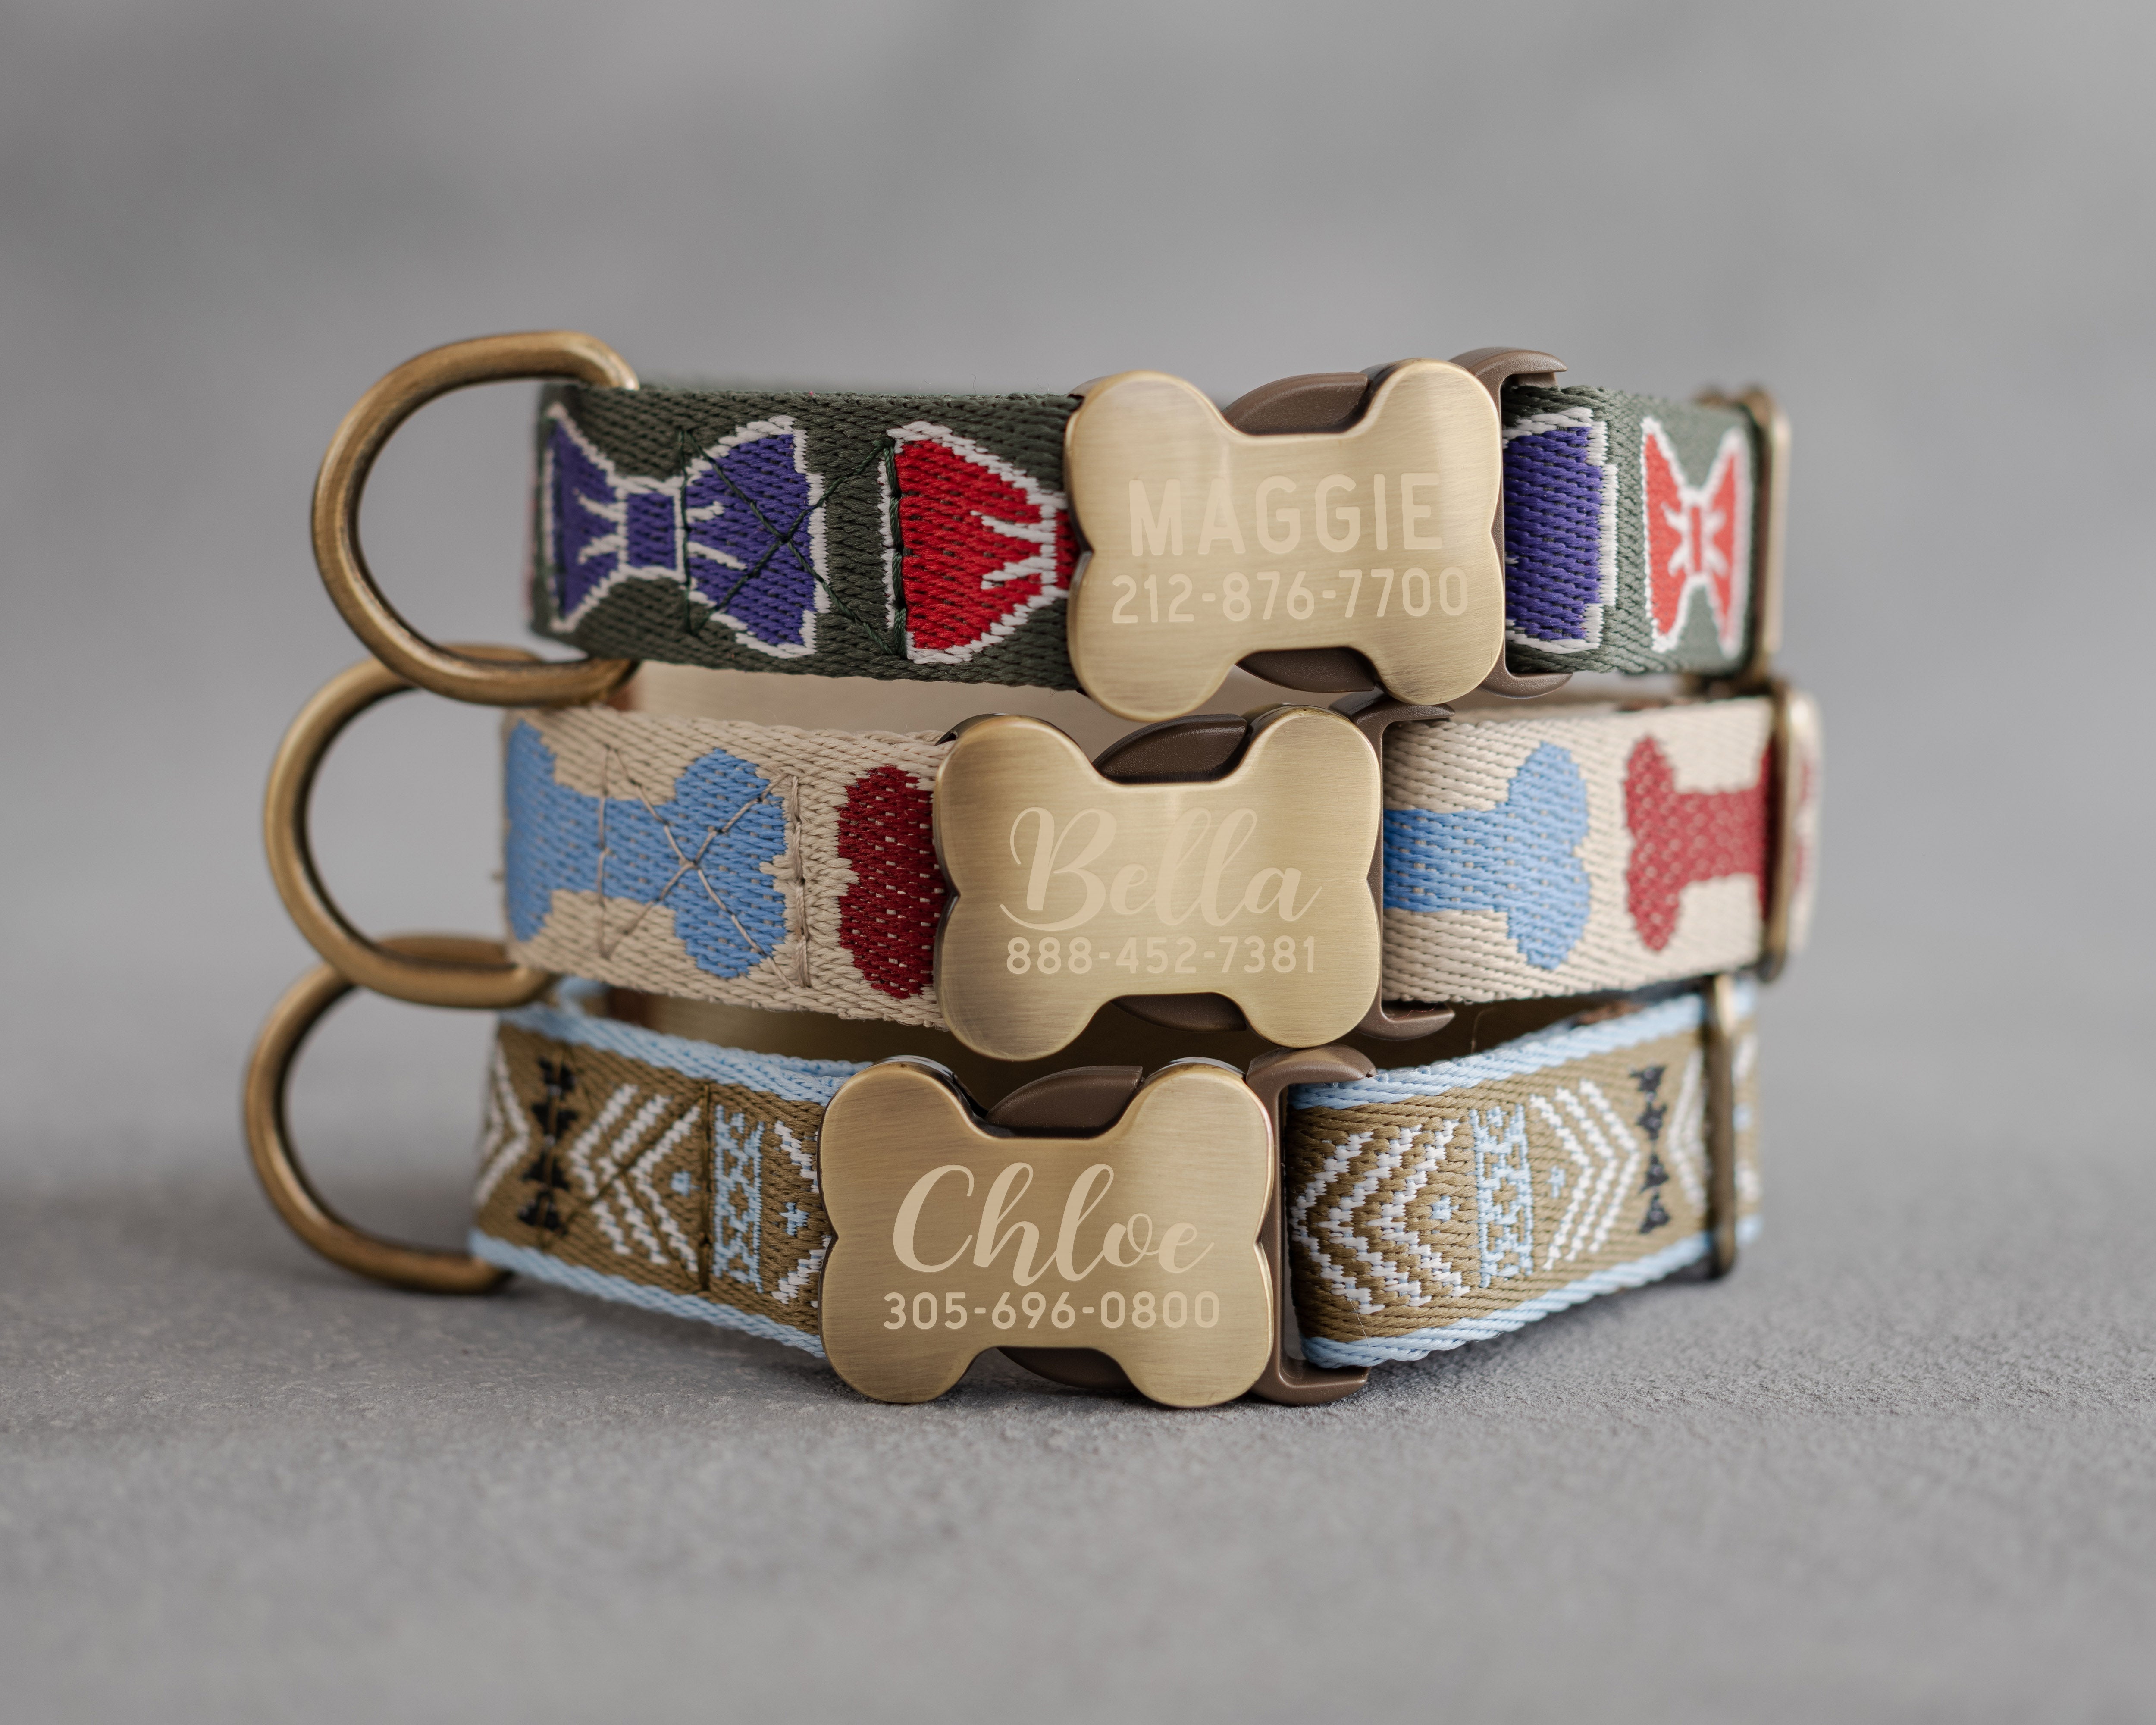 Personalized dog collar in designer webbing